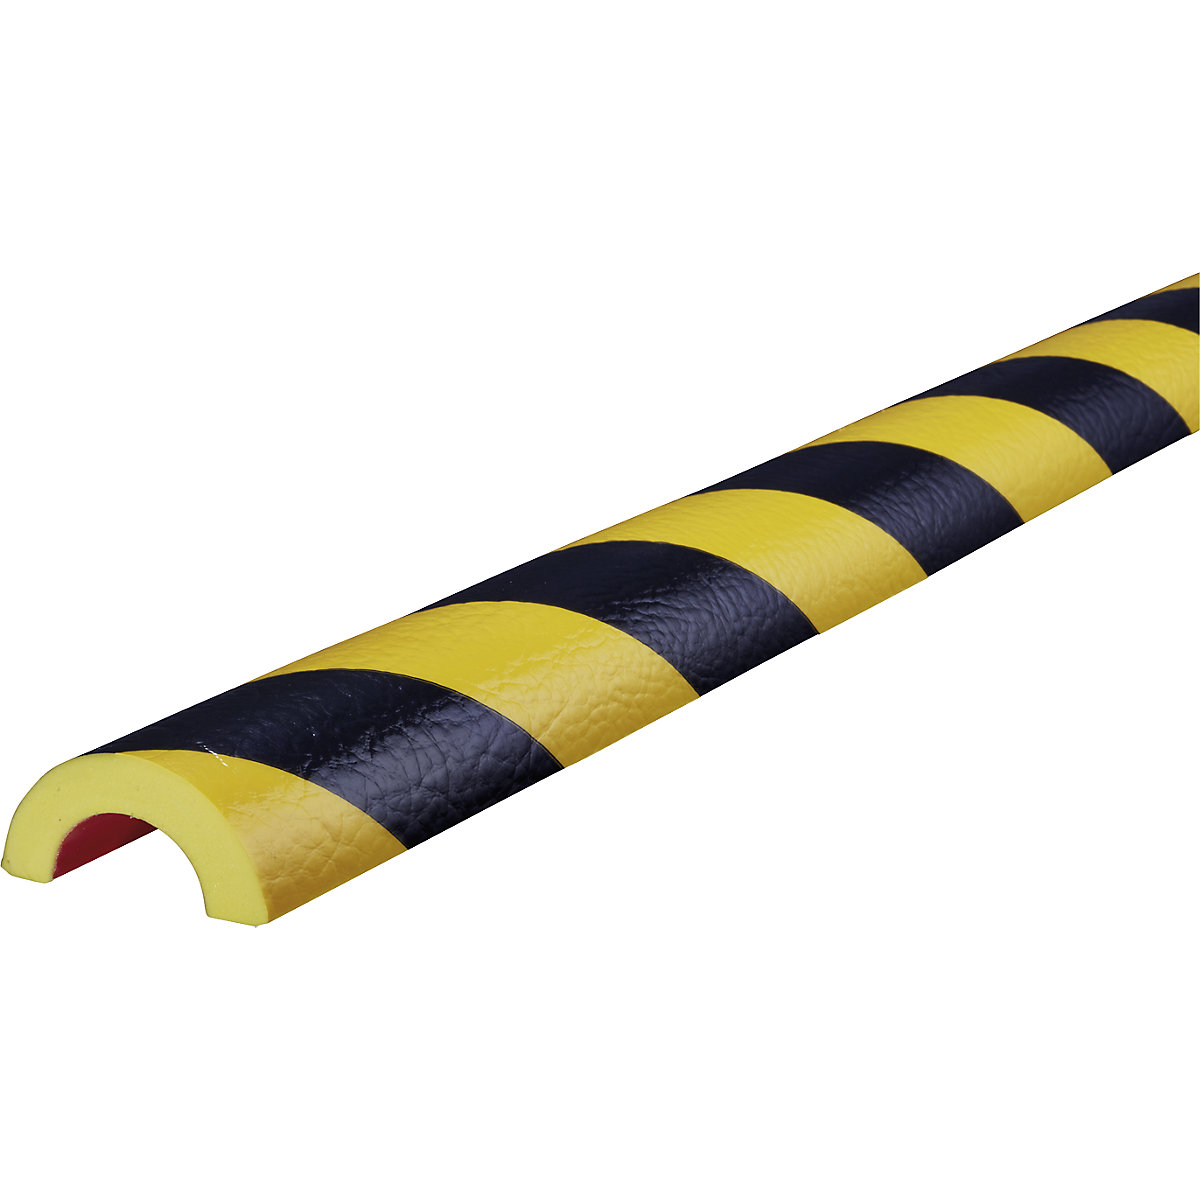 Ochrana rúr Knuffi® – SHG, typ R30, 1 m kus, čierna / žltá-10